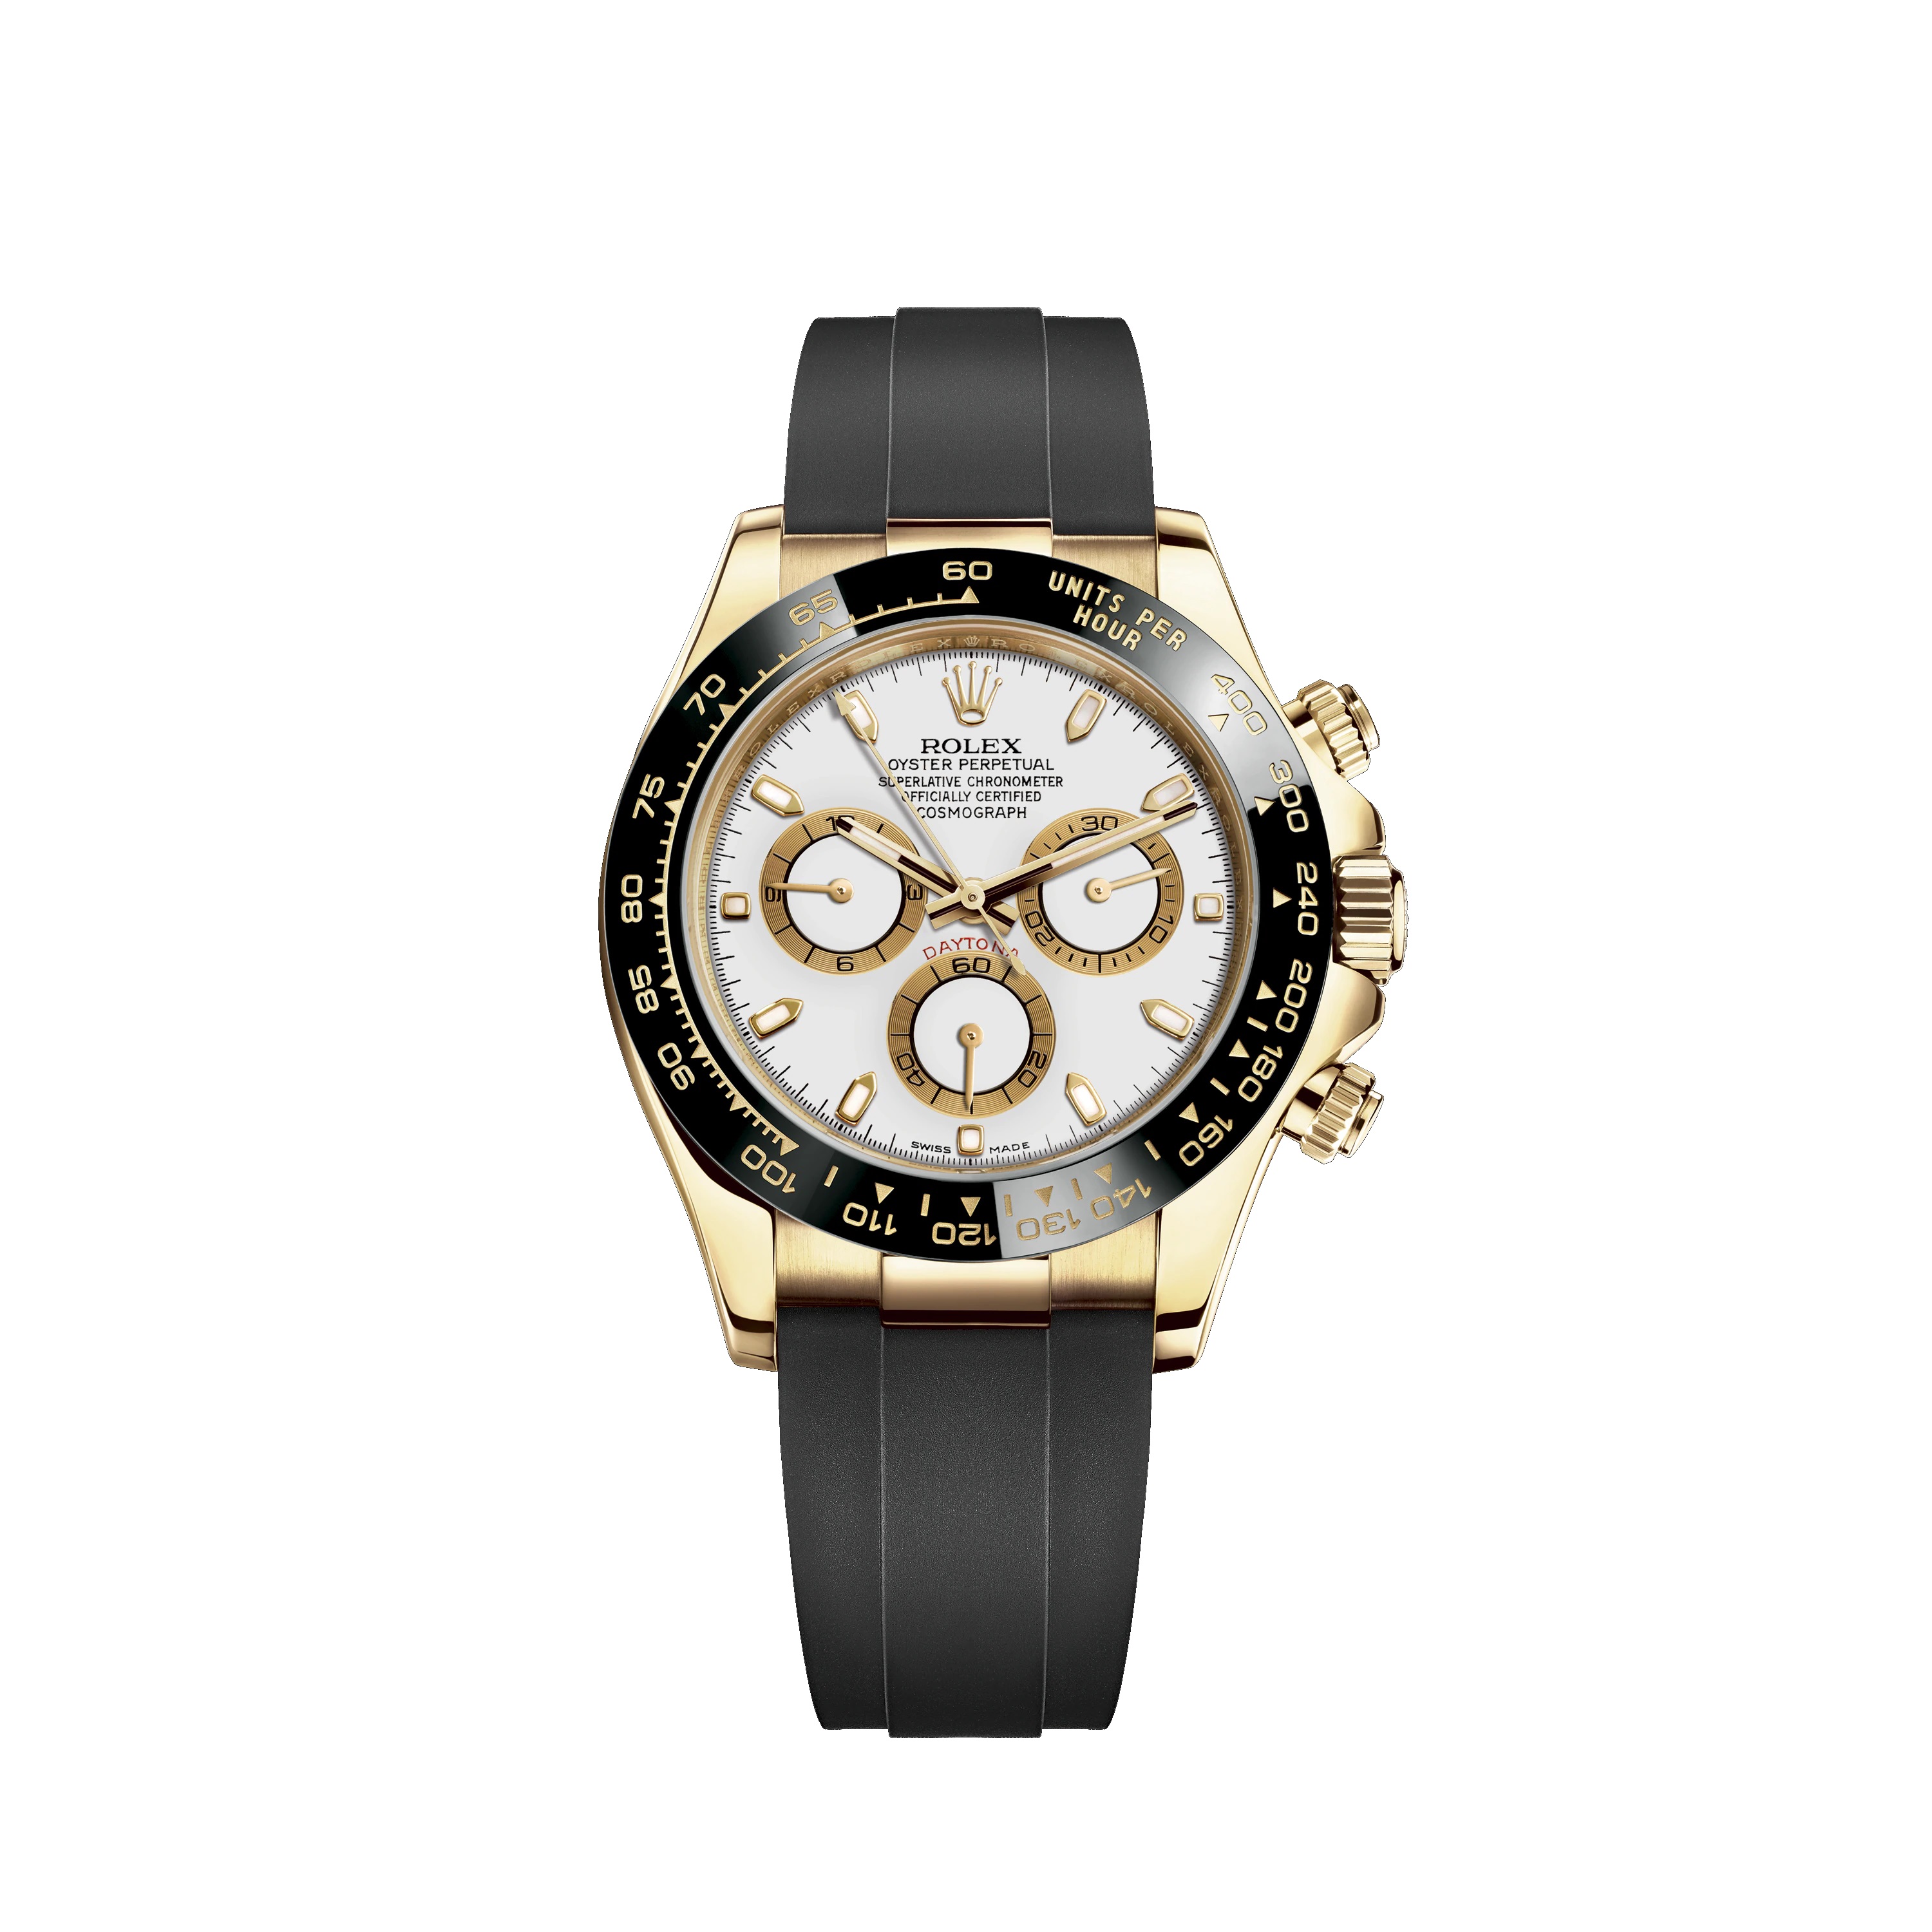 Cosmograph Daytona 116518LN Gold Watch (White)